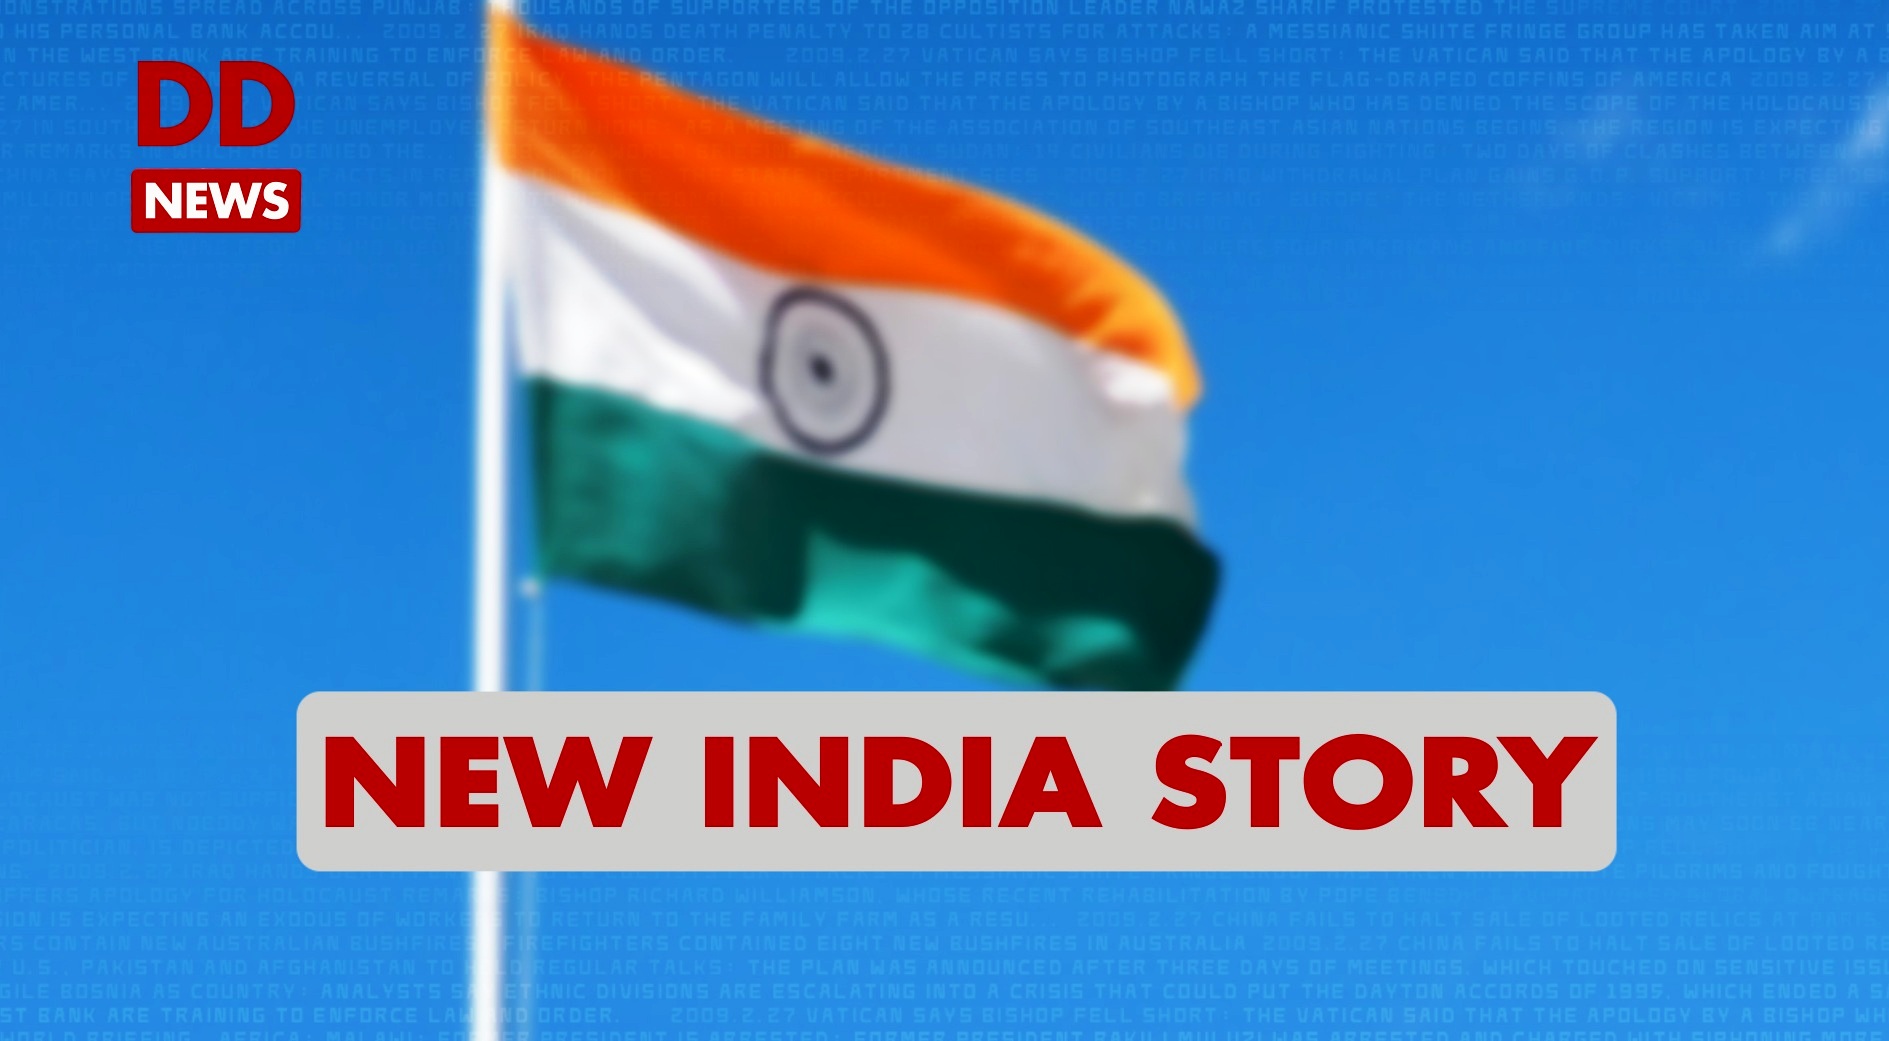 New India Story / Telangana / Mahbubnagar / Digital India